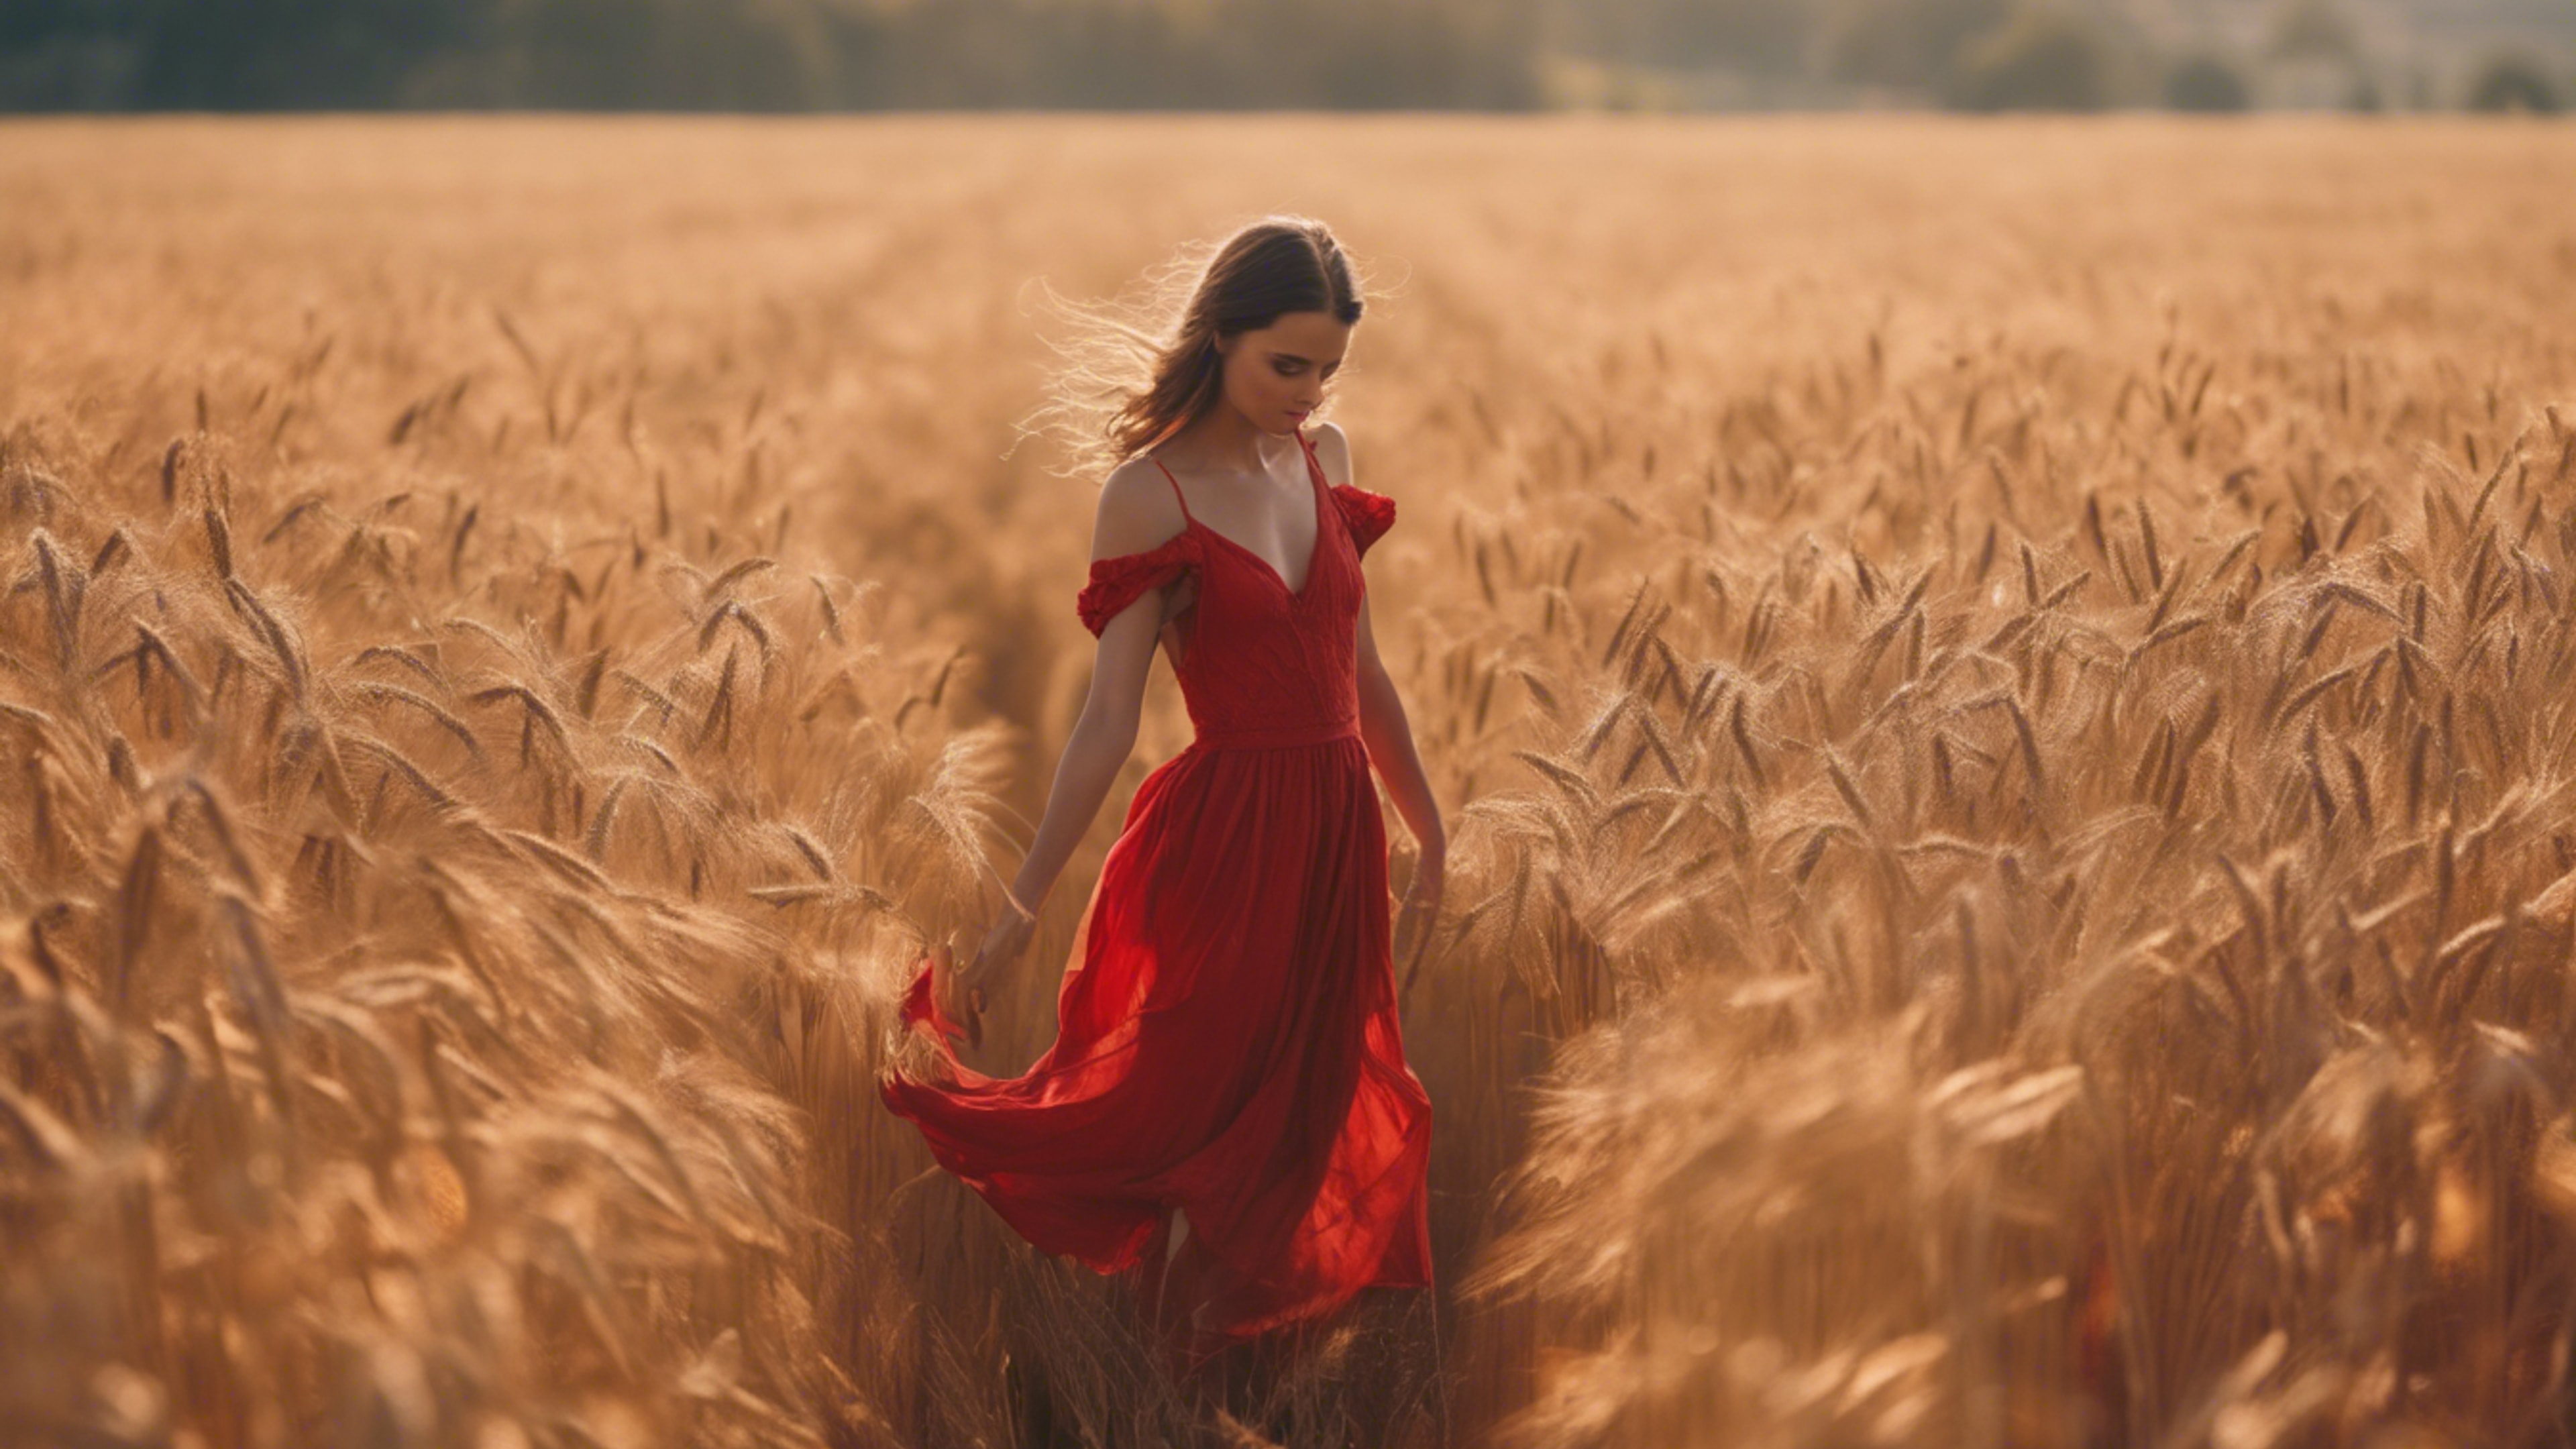 A young girl in a fiery red dress dancing in a golden wheat field. Wallpaper[3d2bbc59672c41dea075]